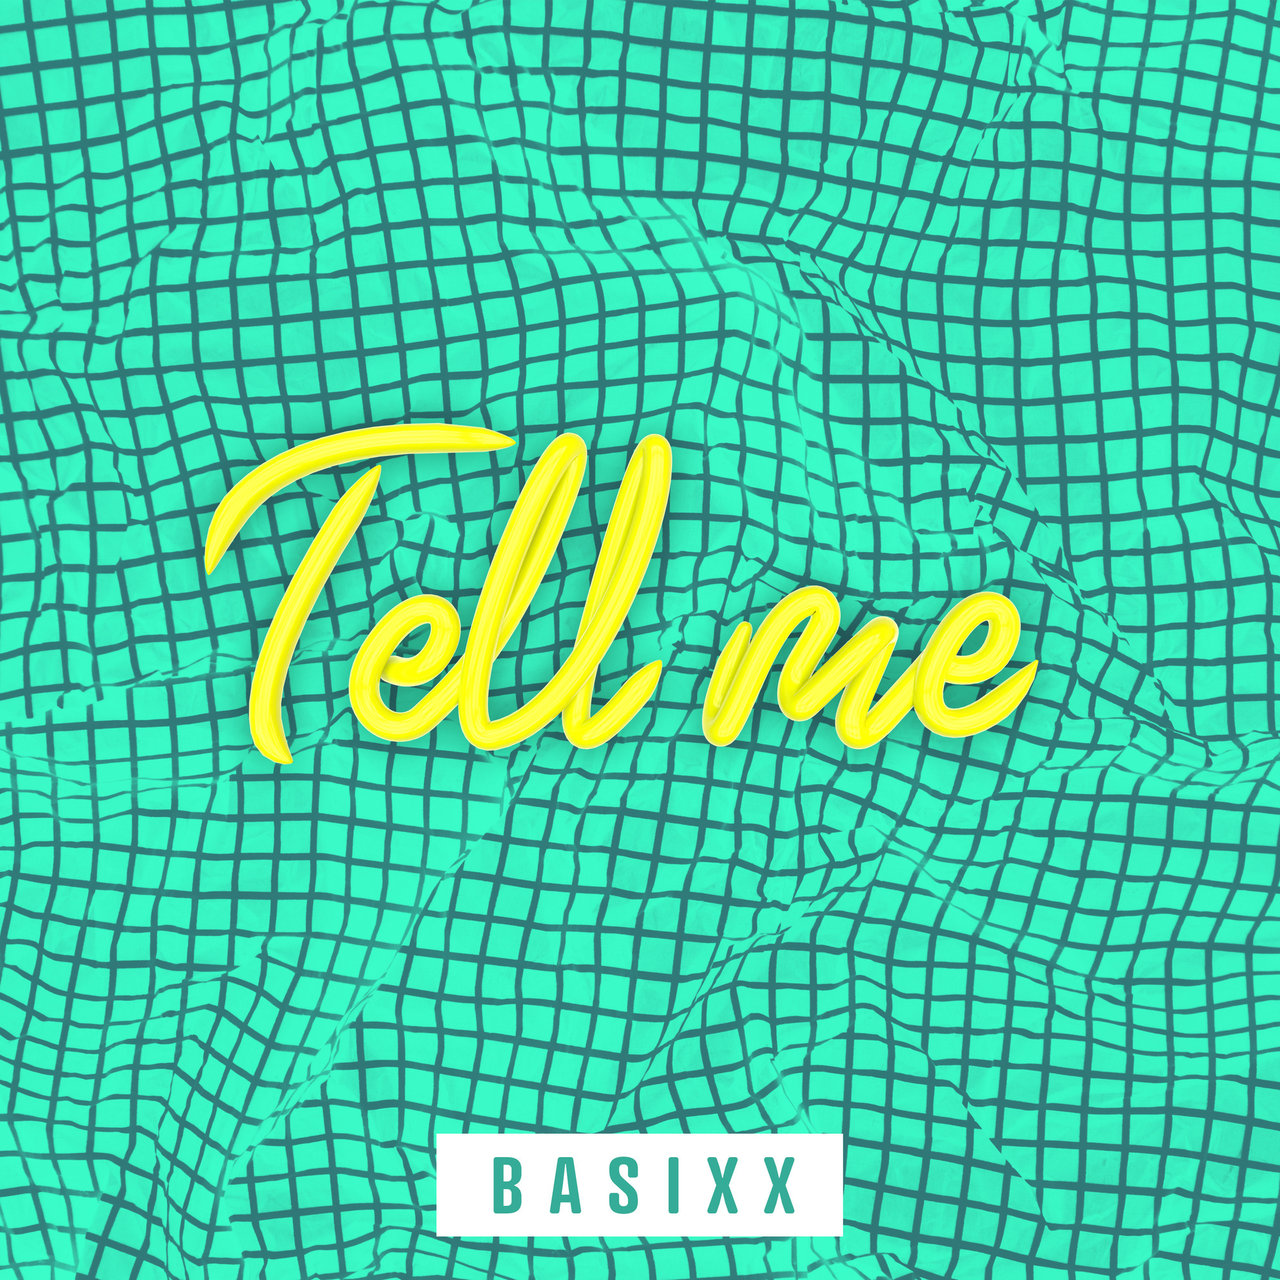 Basixx Tell Me cover artwork